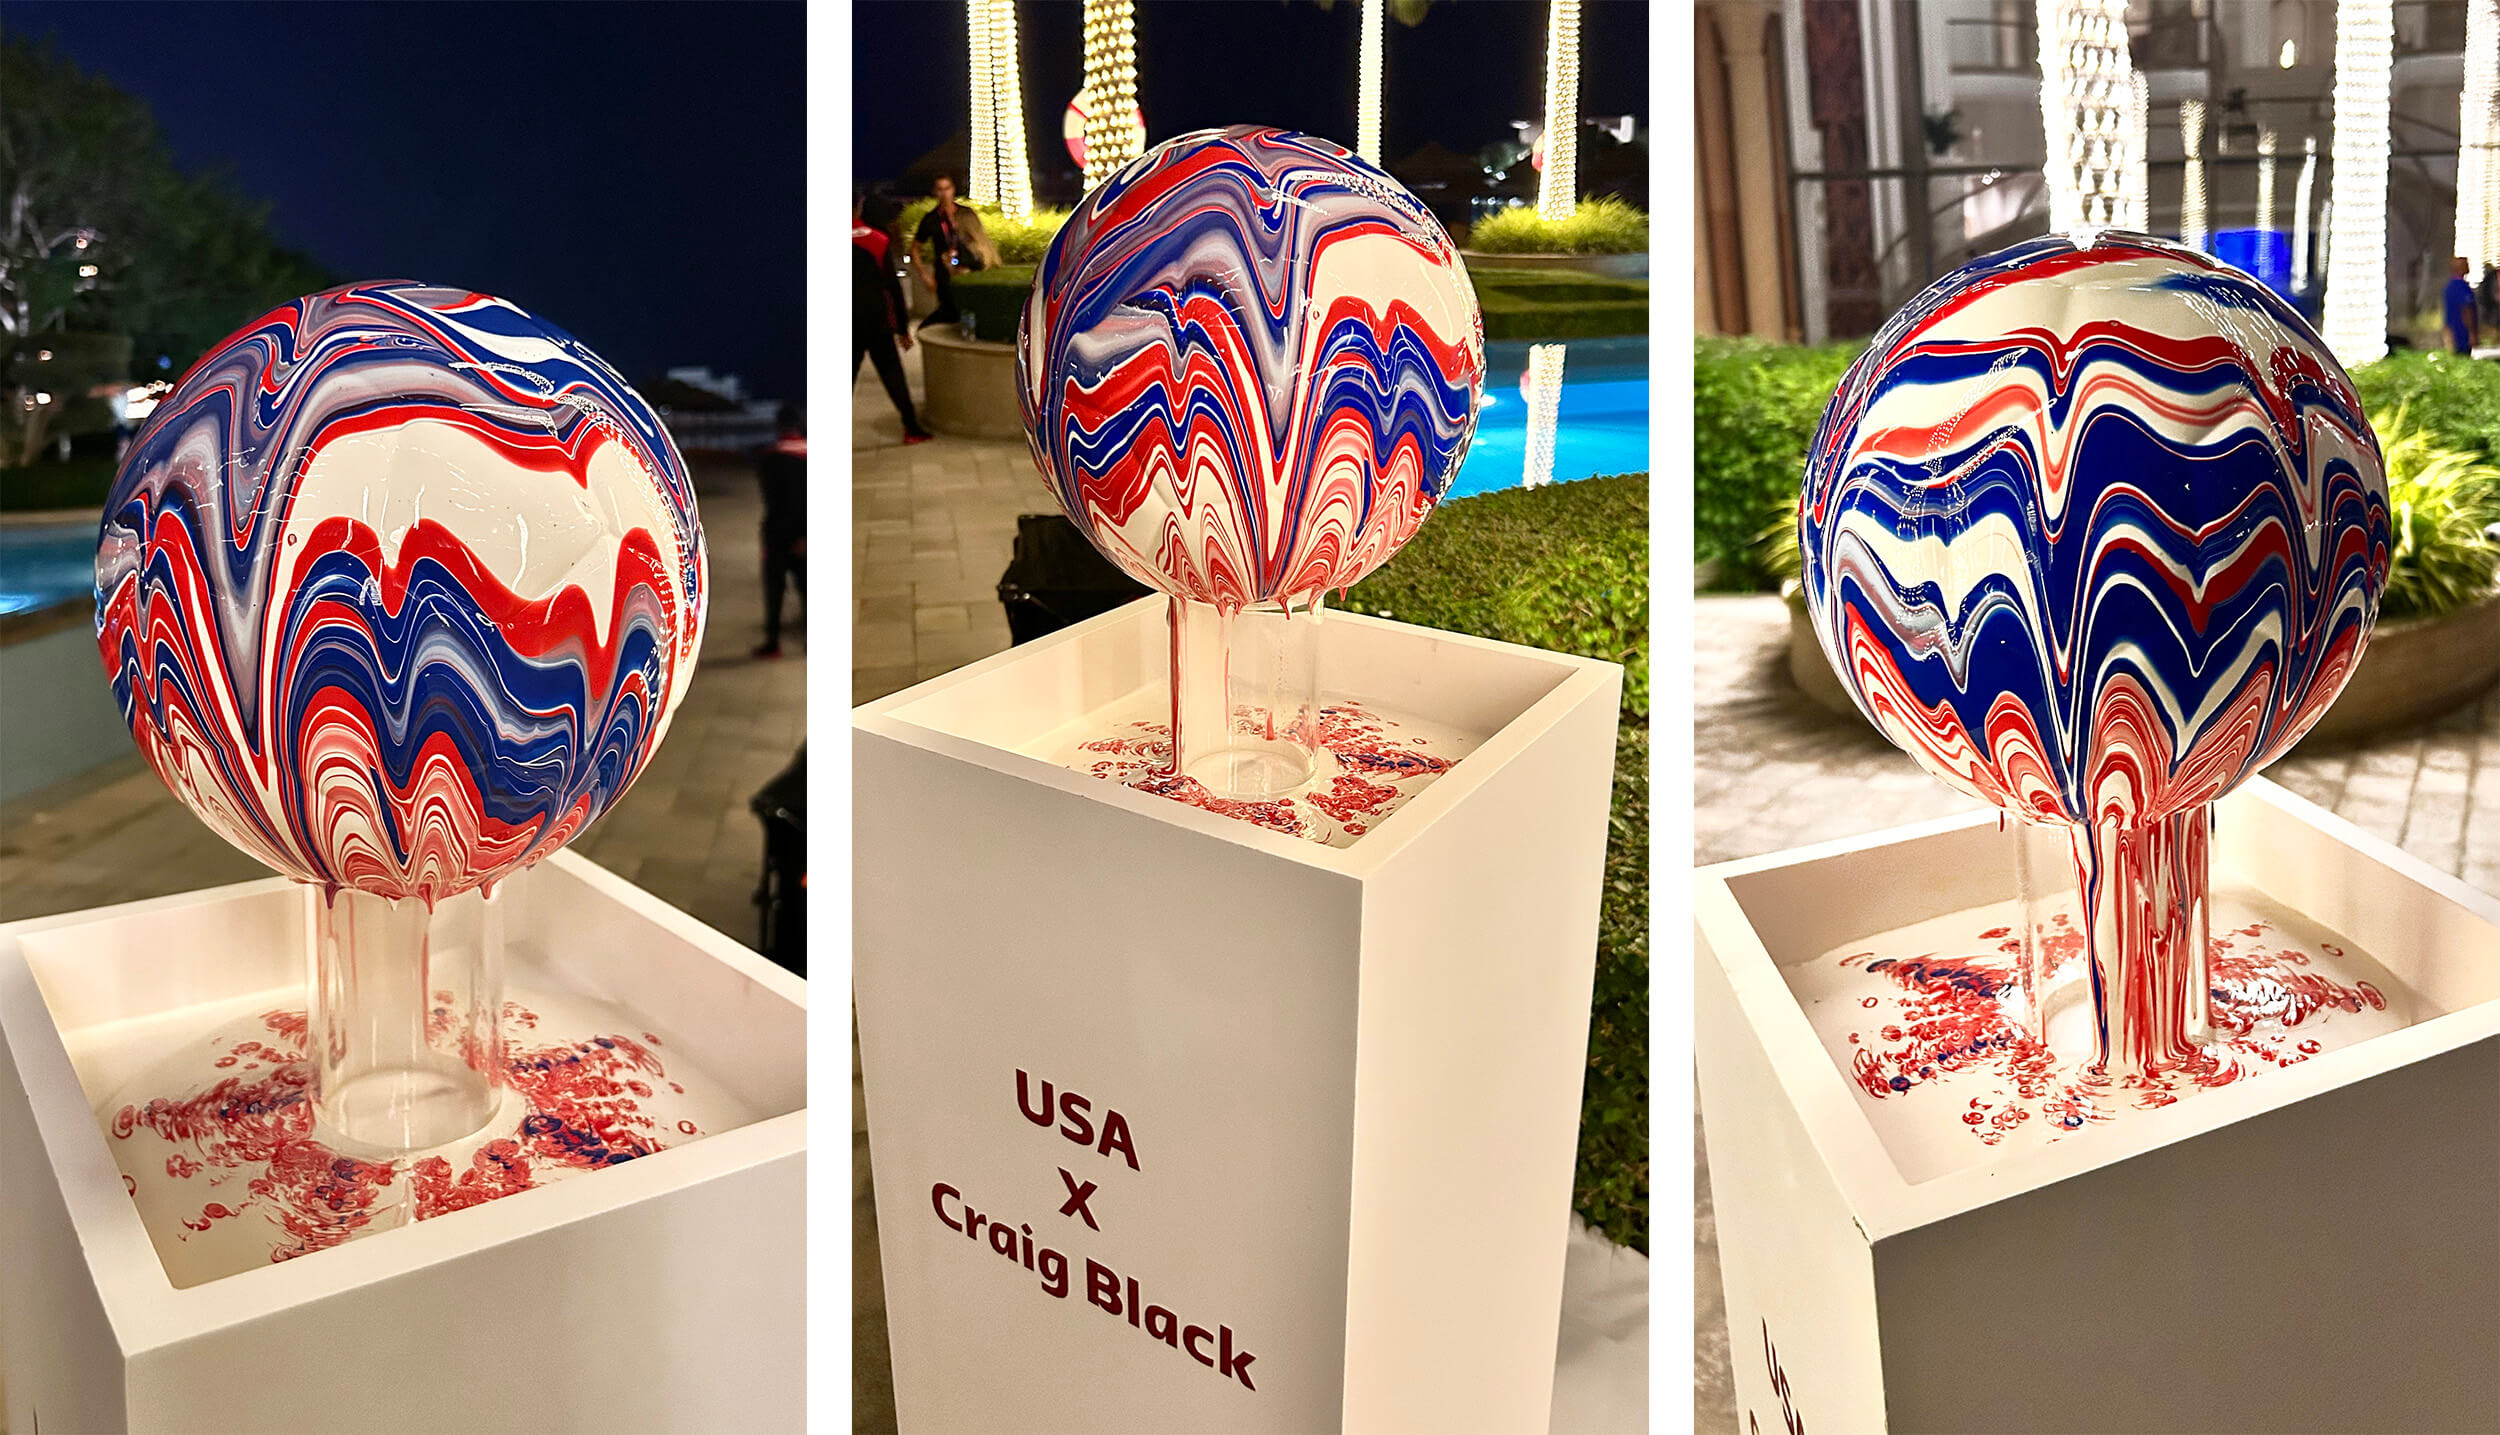 Craig Black x FIFA World Cup 2022_Live Art Performance_Acrylic F